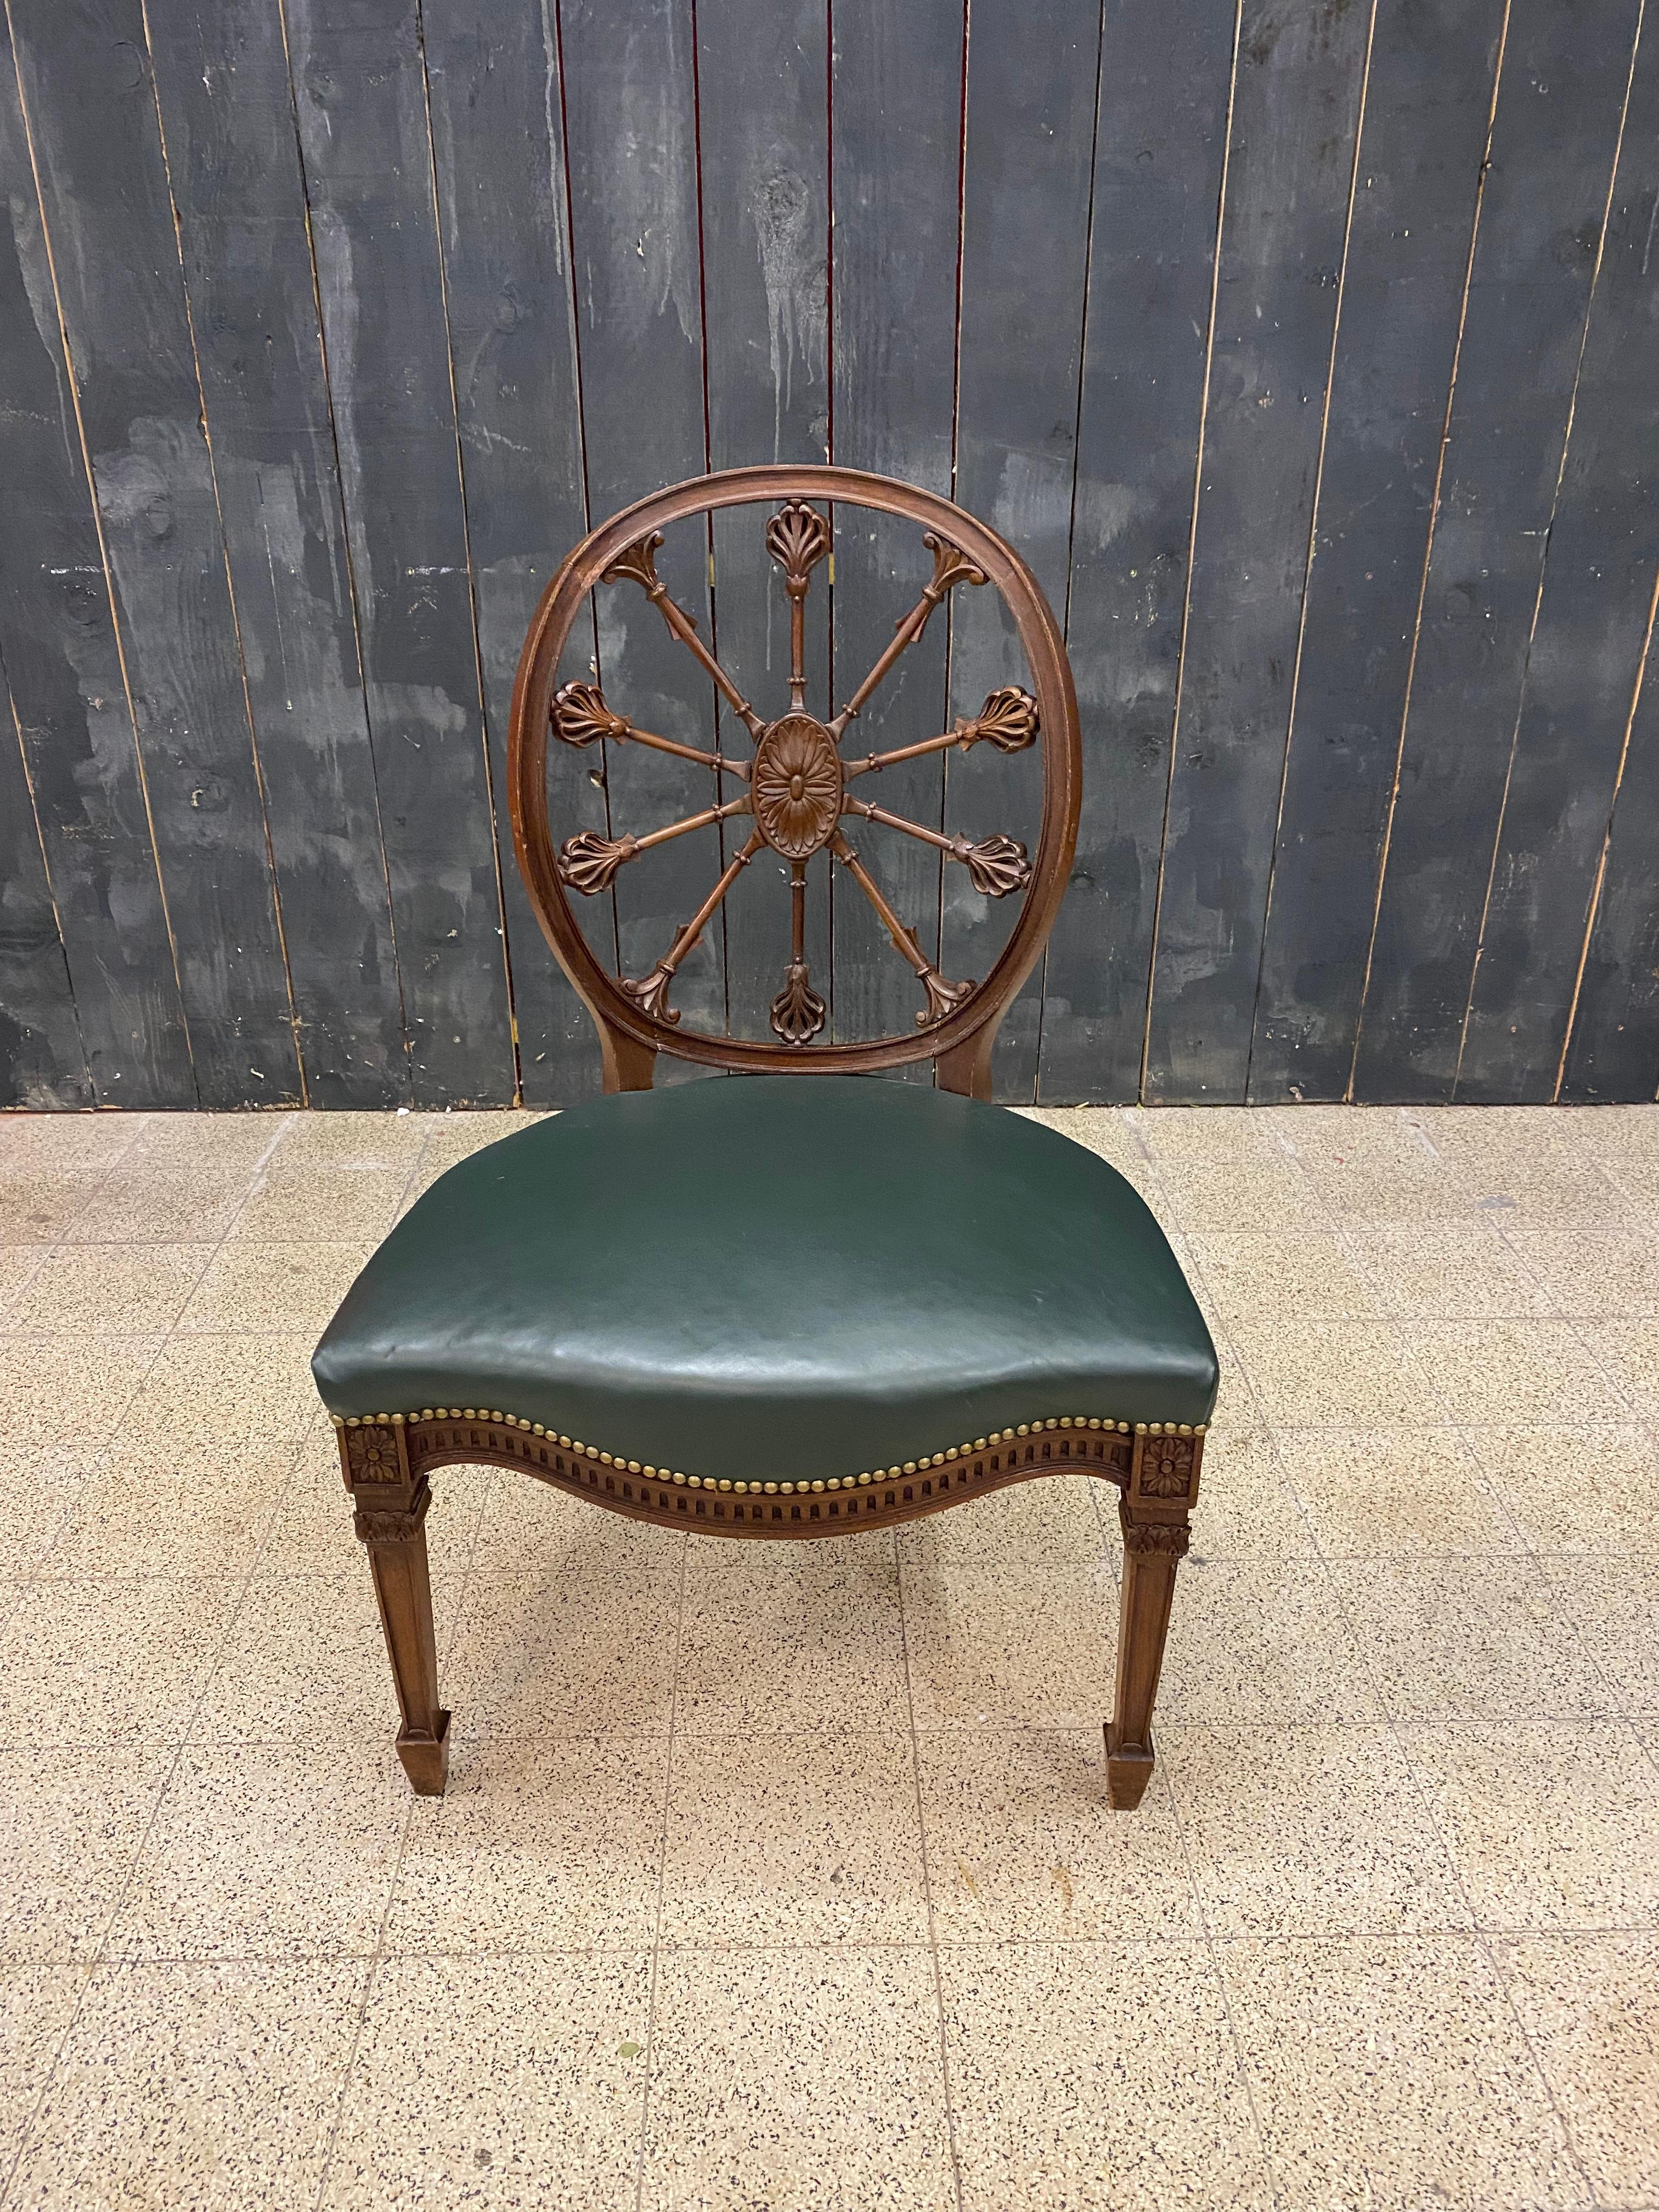 Original Victorian style bergère armchair, fully restored.